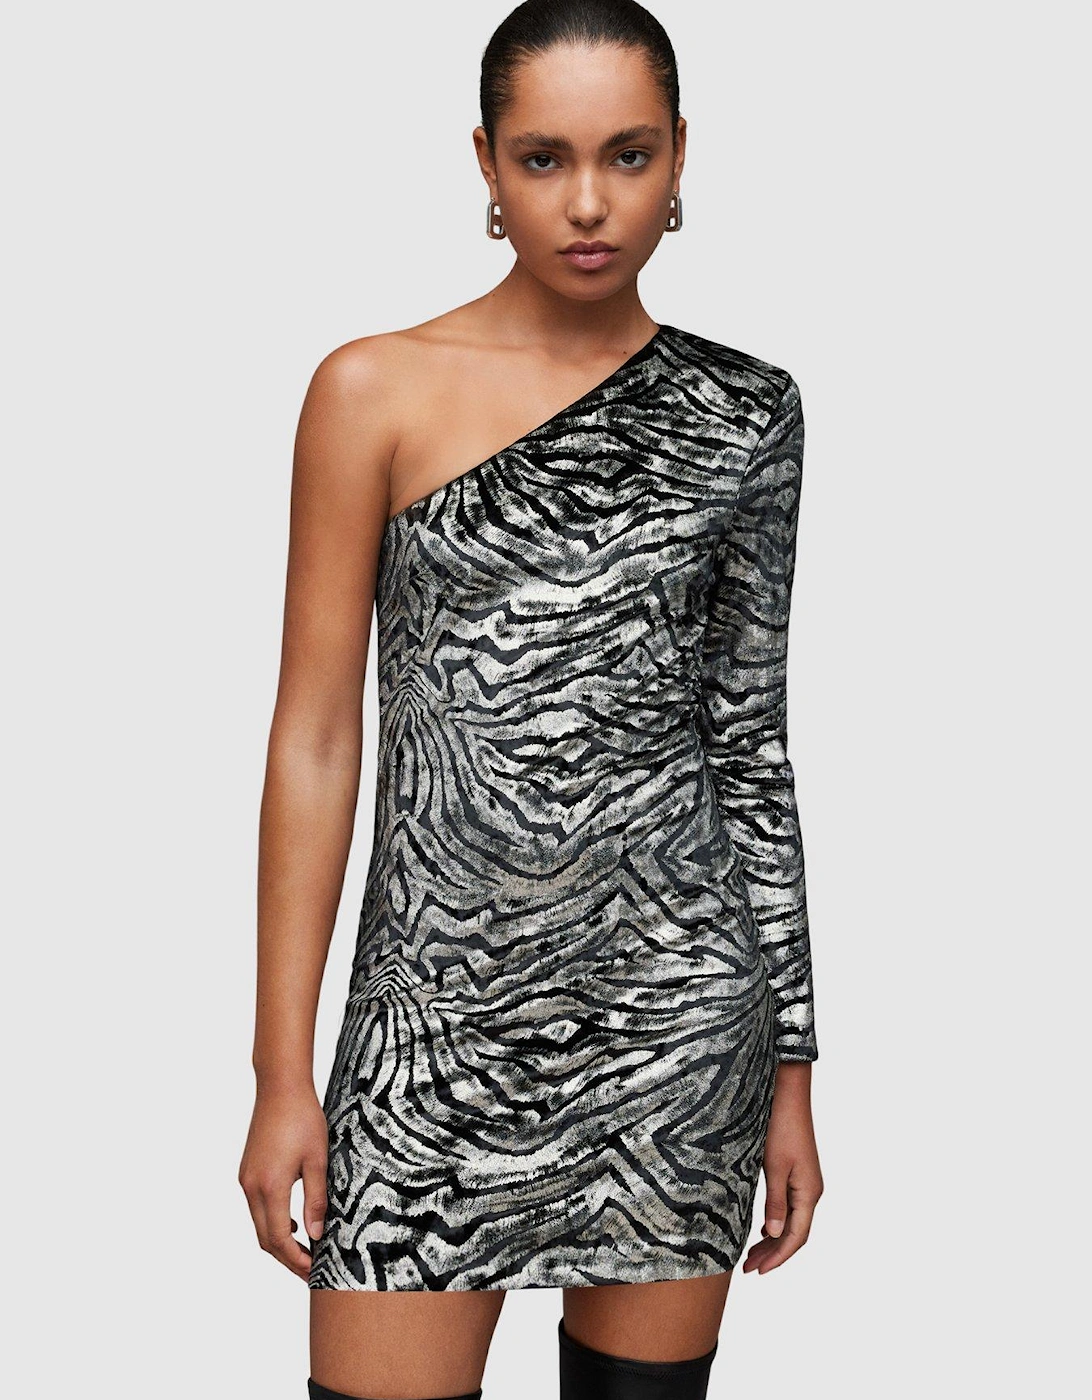 Deri Zebra Dress - Black/Silver, 3 of 2